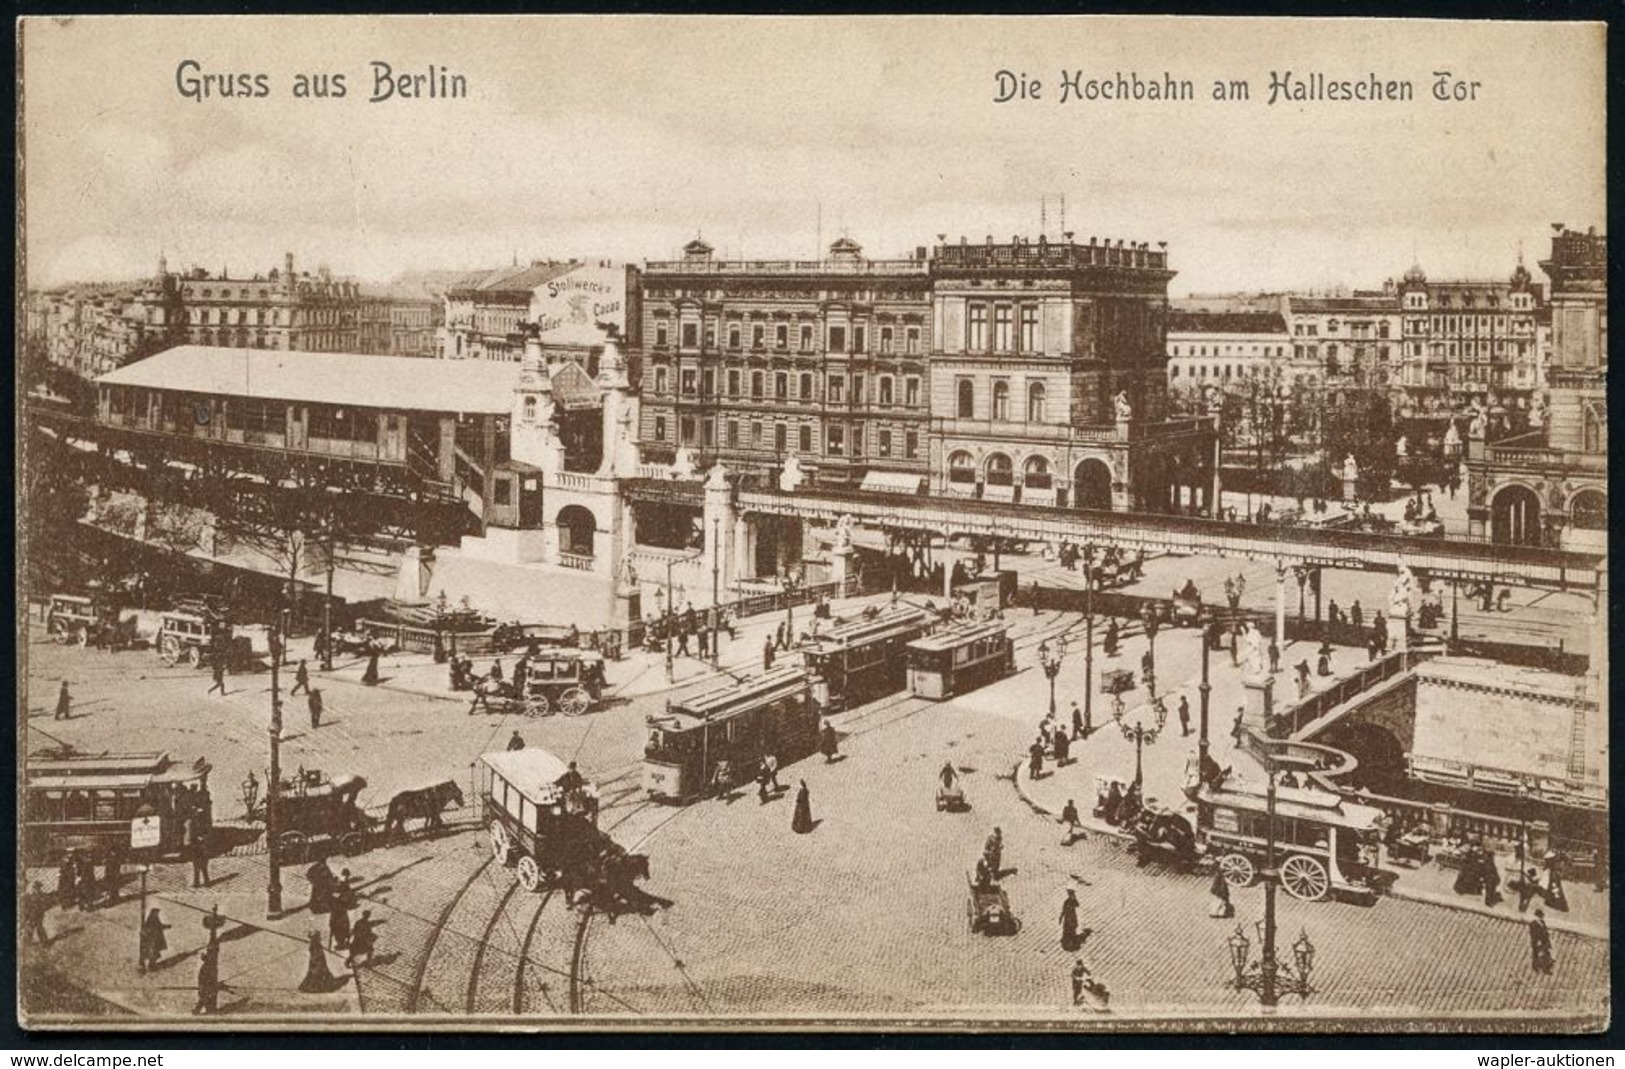 UNTERGRUNDBAHN /U-BAHN : Berlin-Kreuzberg 1902/14 U-Bahnhof Hallesches Tor, 8 verschiedene s/w.-Foto-Ak. , meist gebr., 